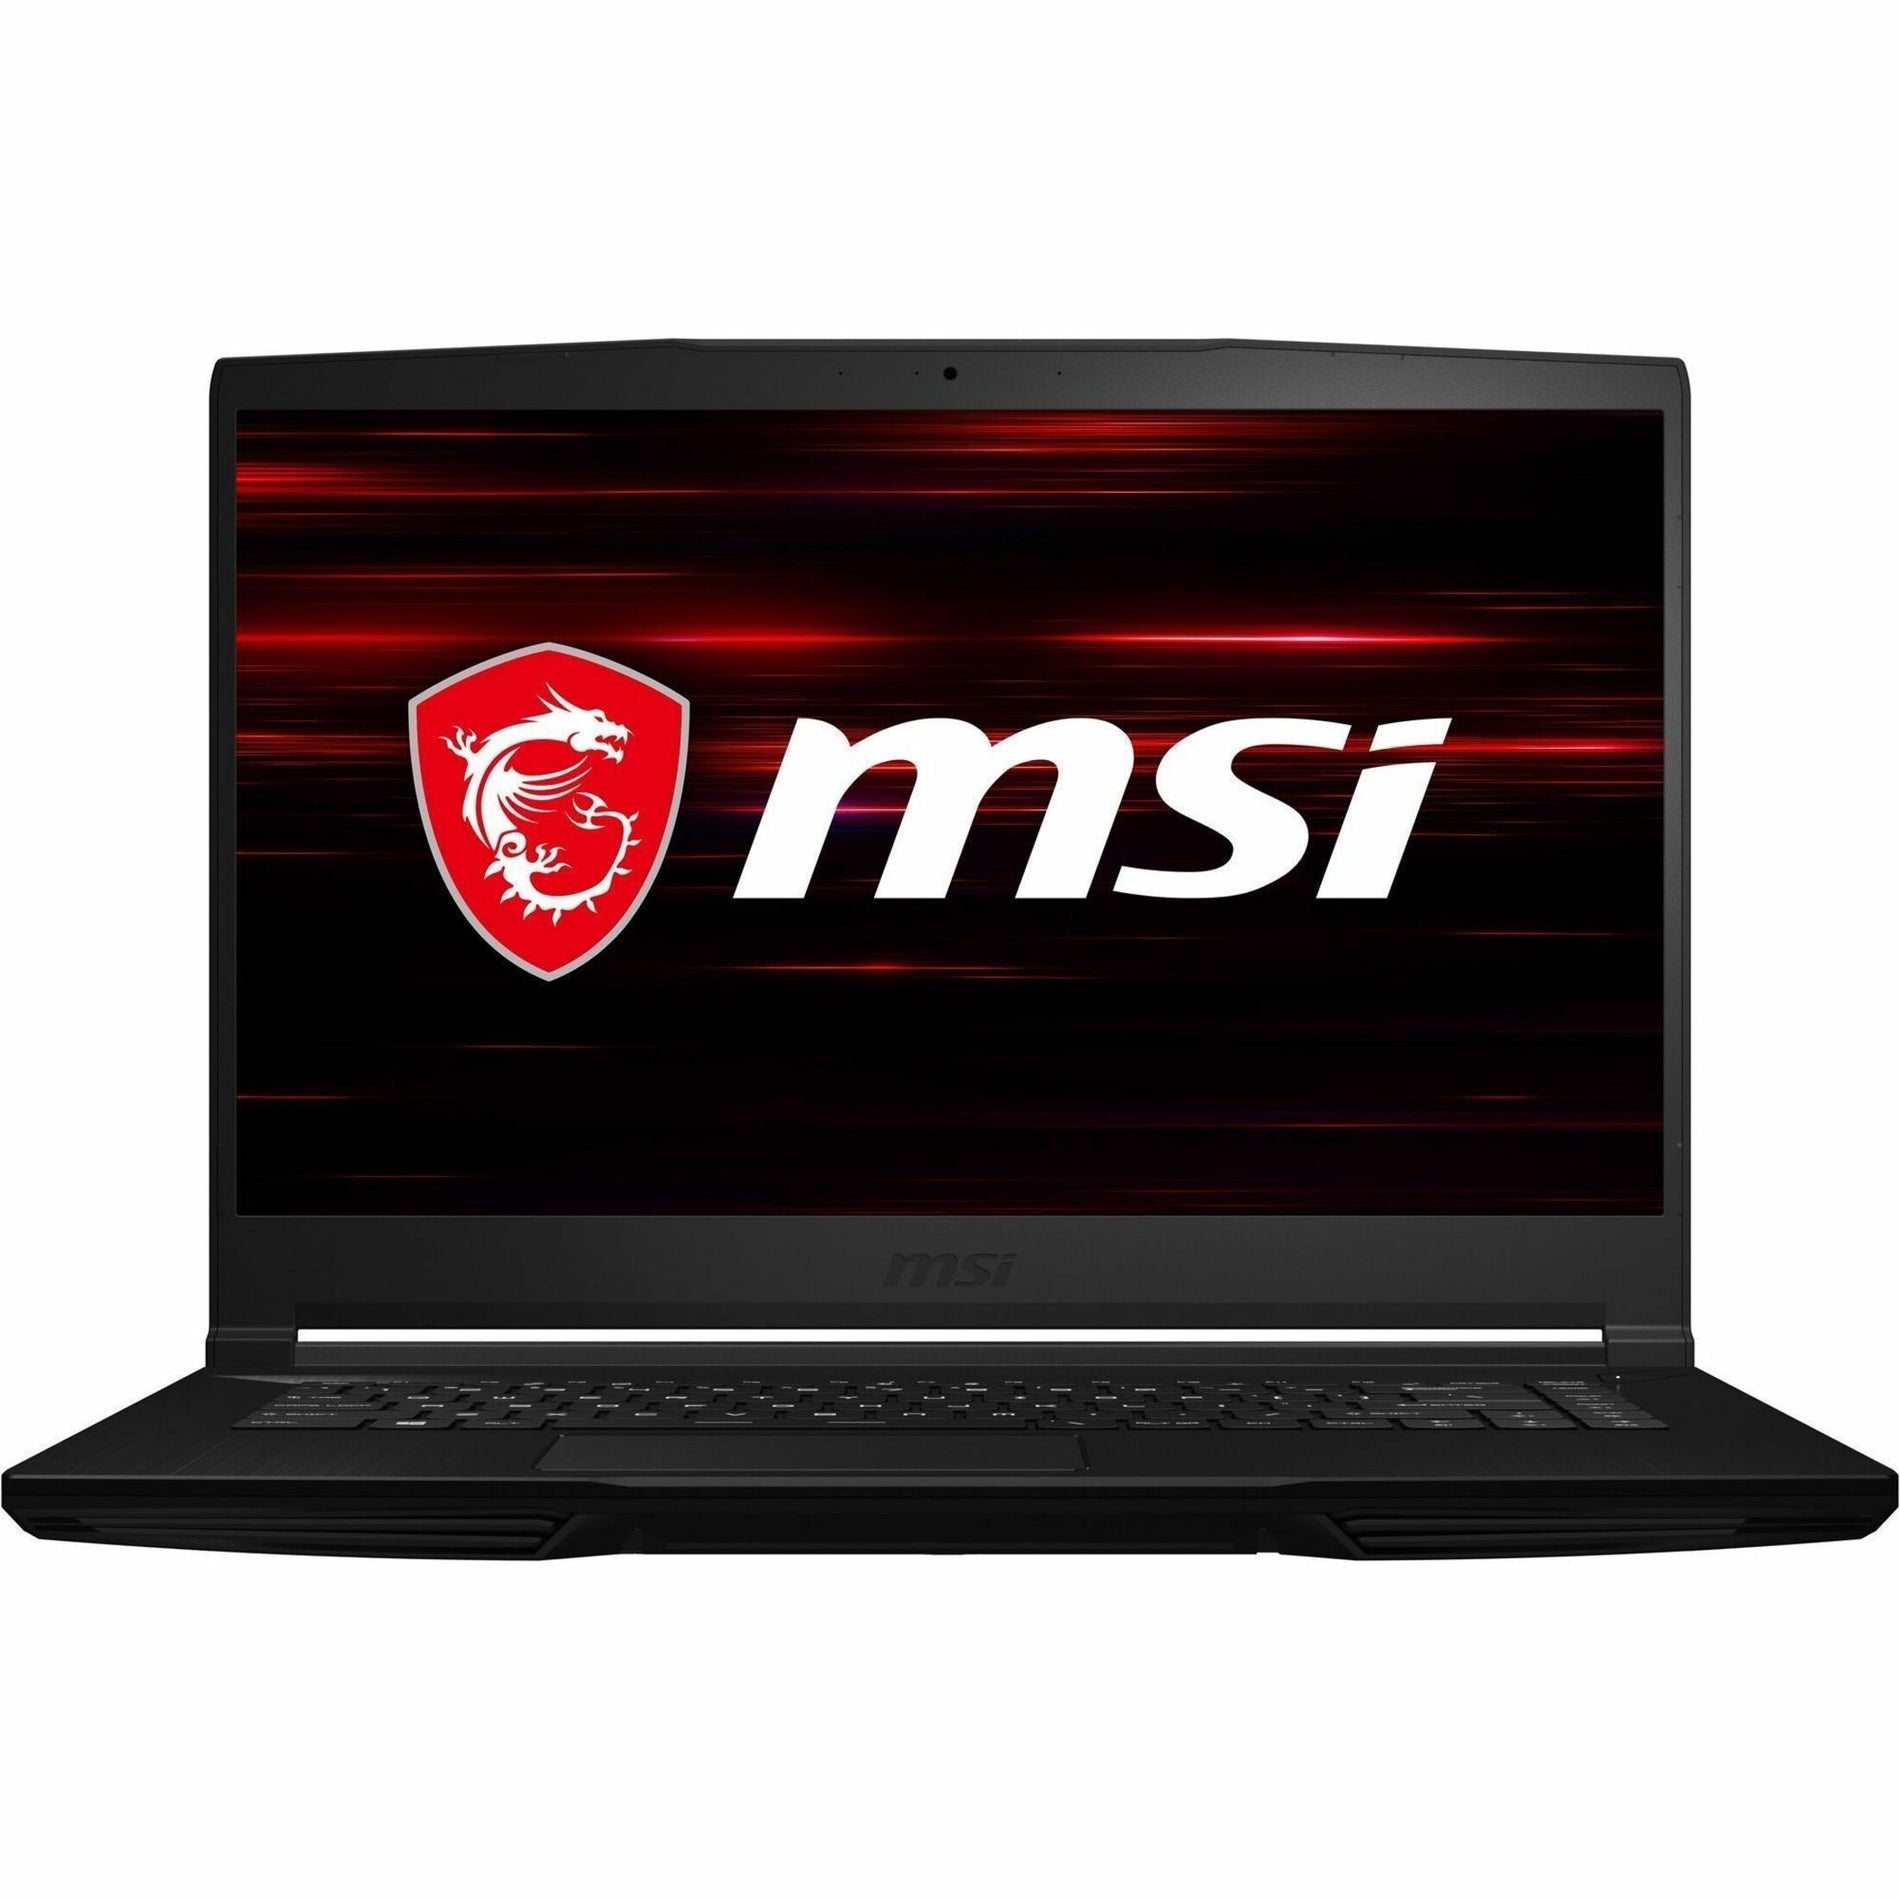 MSI GF63 THIN GF63111424 Gaming Notebook - 15.6" Full HD, Intel Core i5 11th Gen, 8GB RAM, 512GB SSD, Black